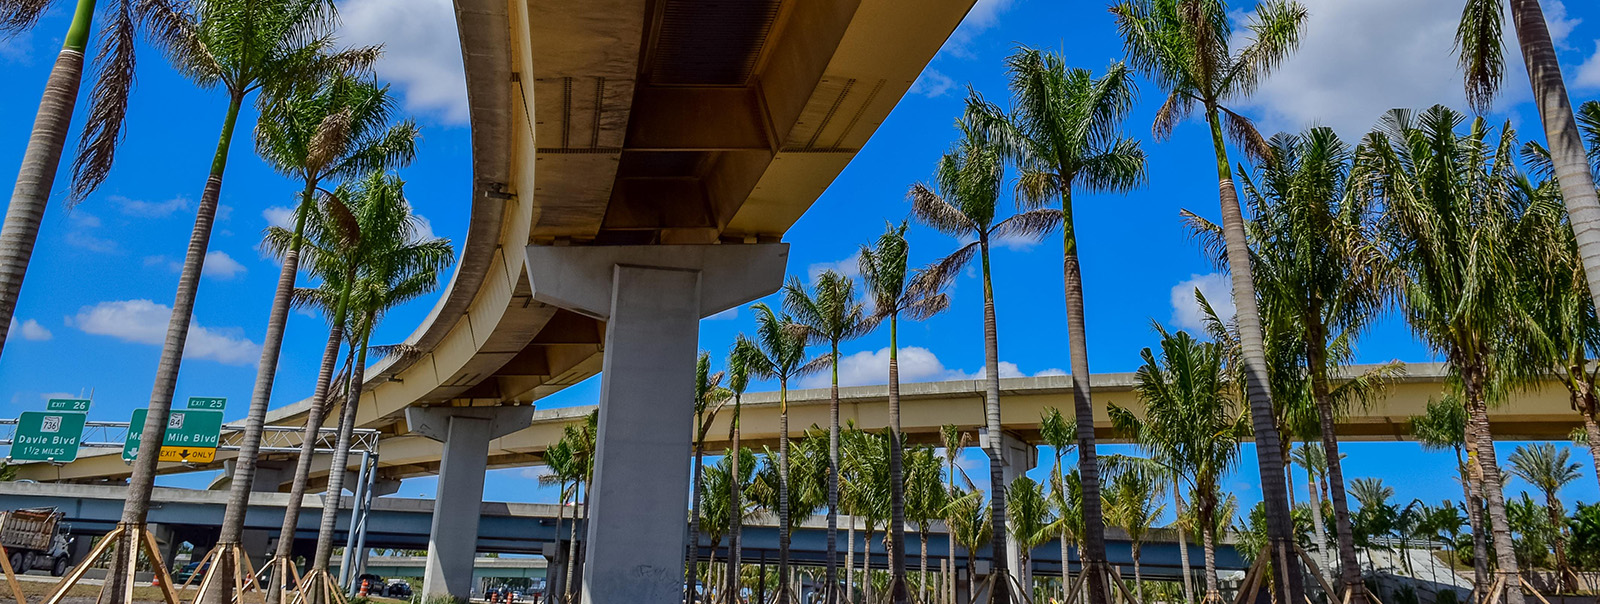 bridge-and-palm-trees